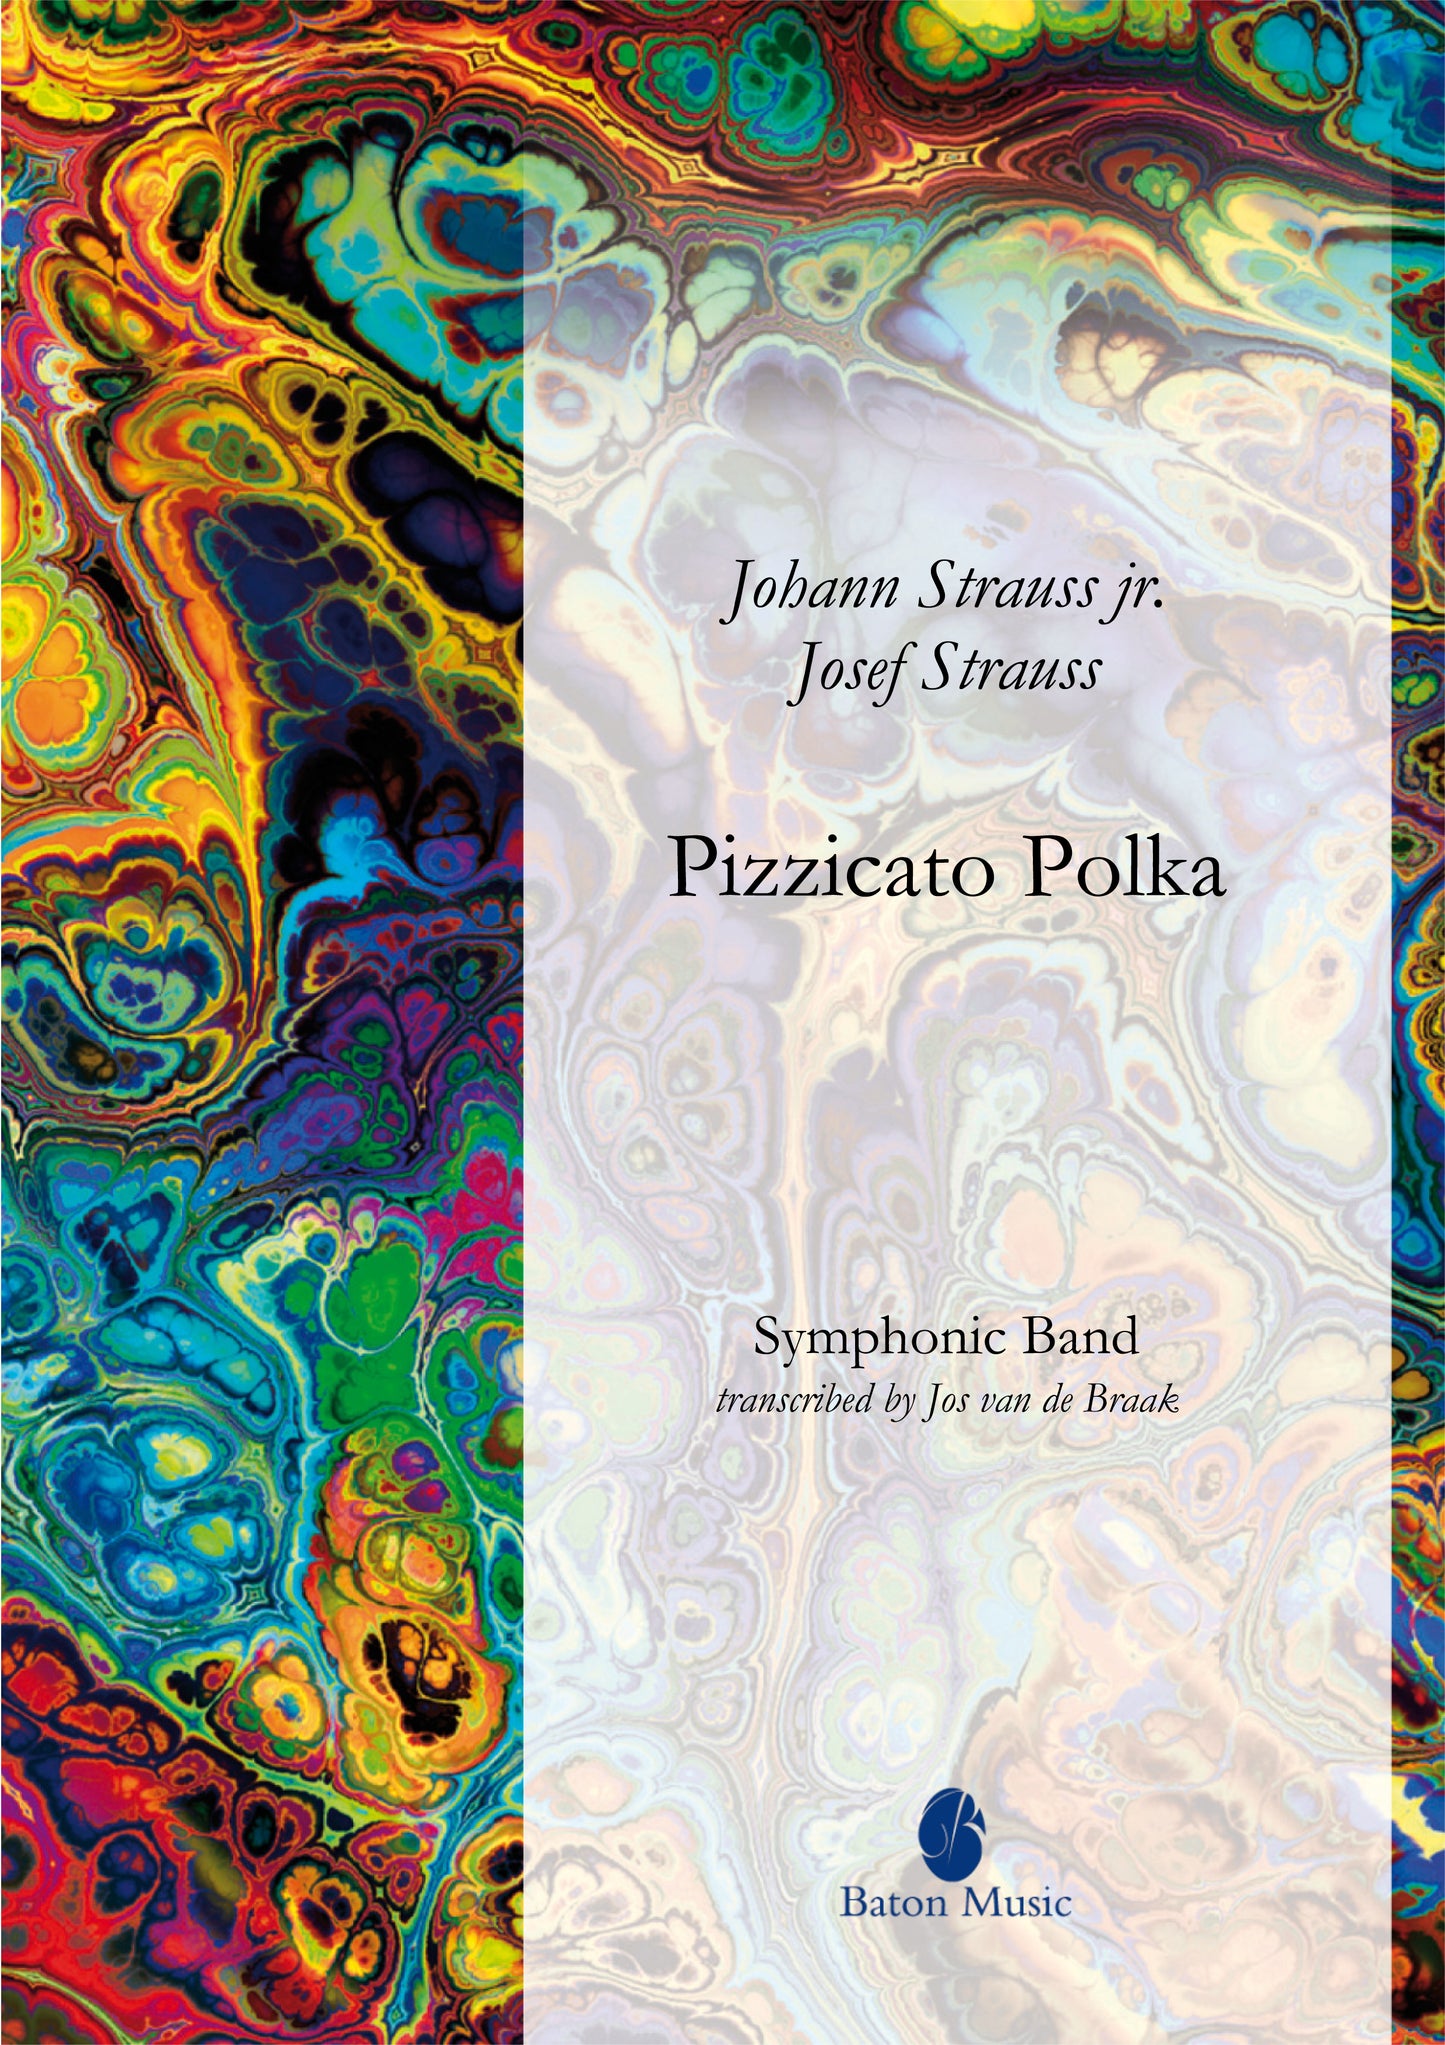 Pizzicato Polka - Johann Strauss